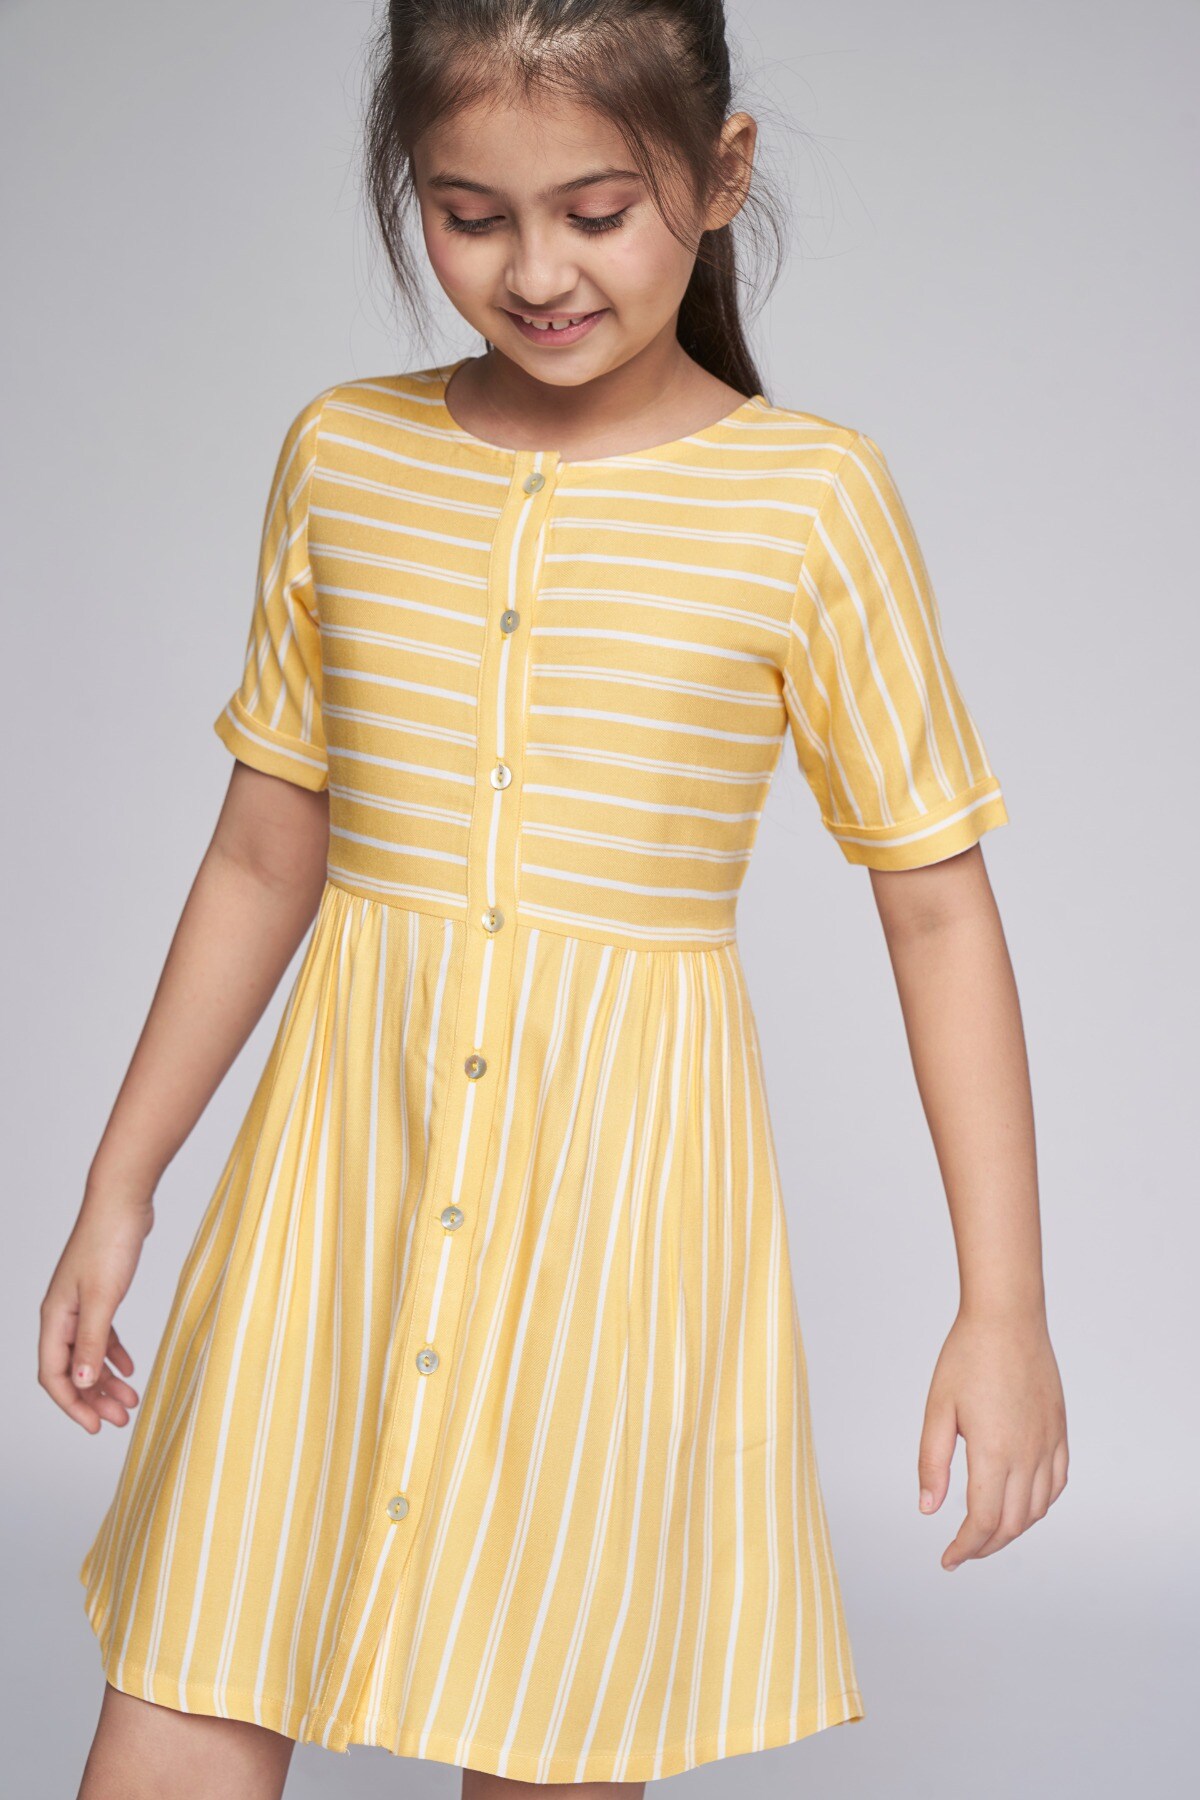 2 - Yellow Stripes Flared Dress, image 2